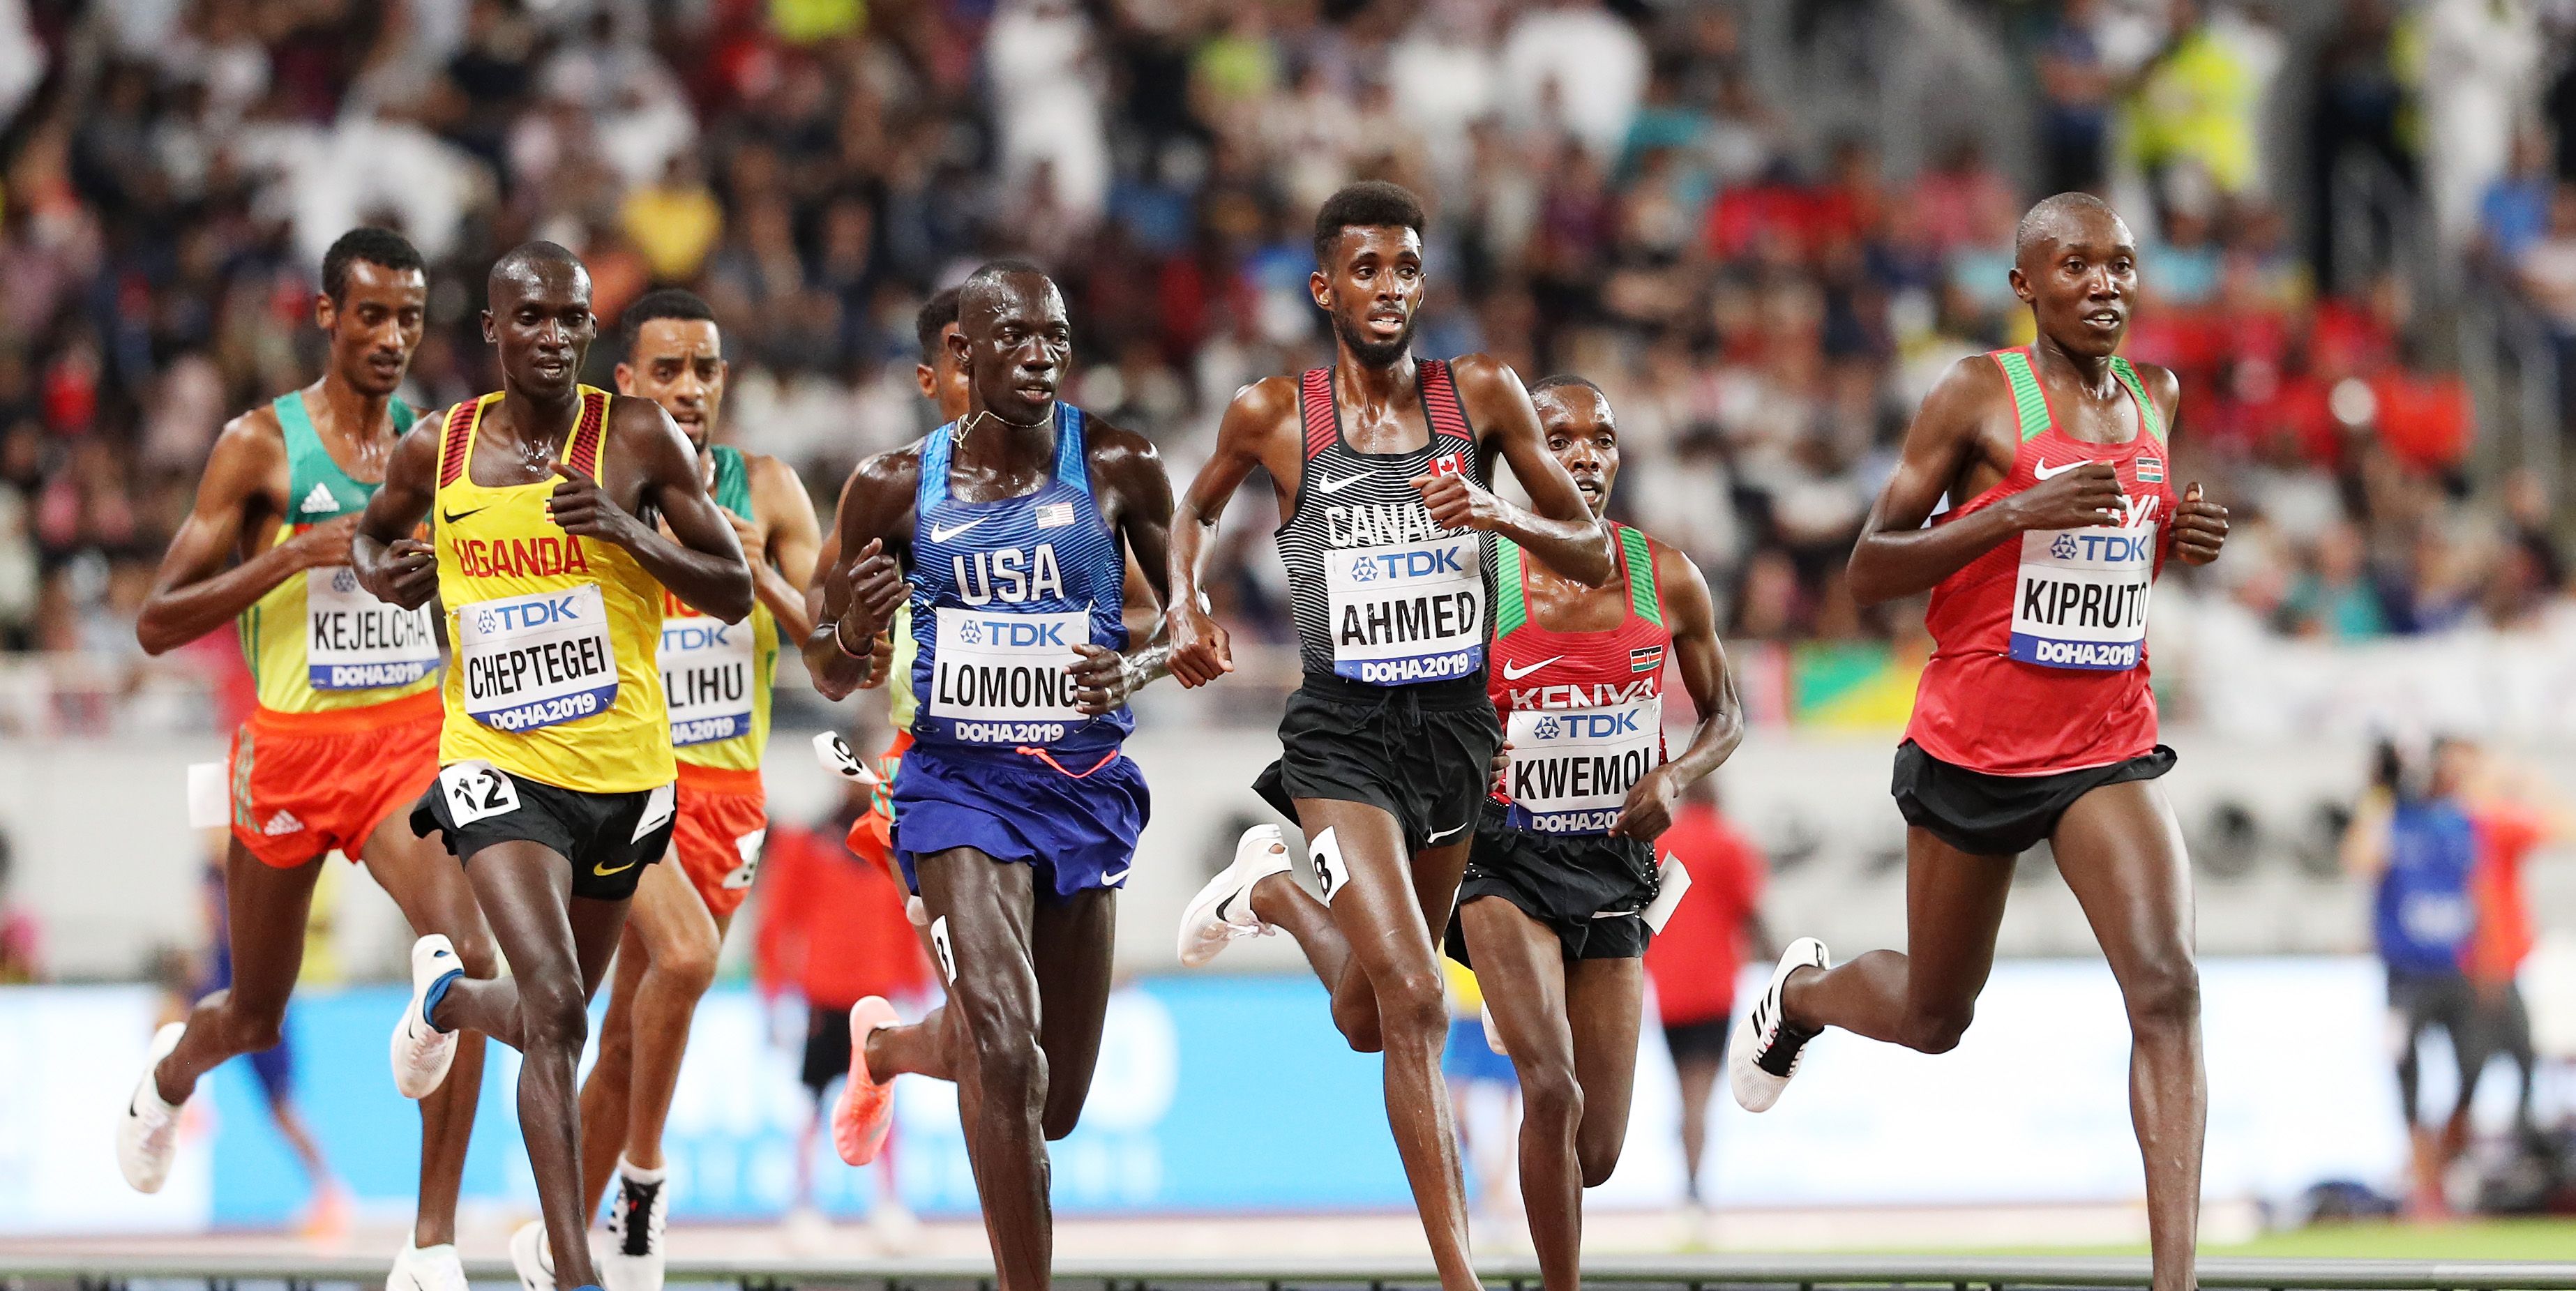 2017 world championships in athletics – men's 200 metres